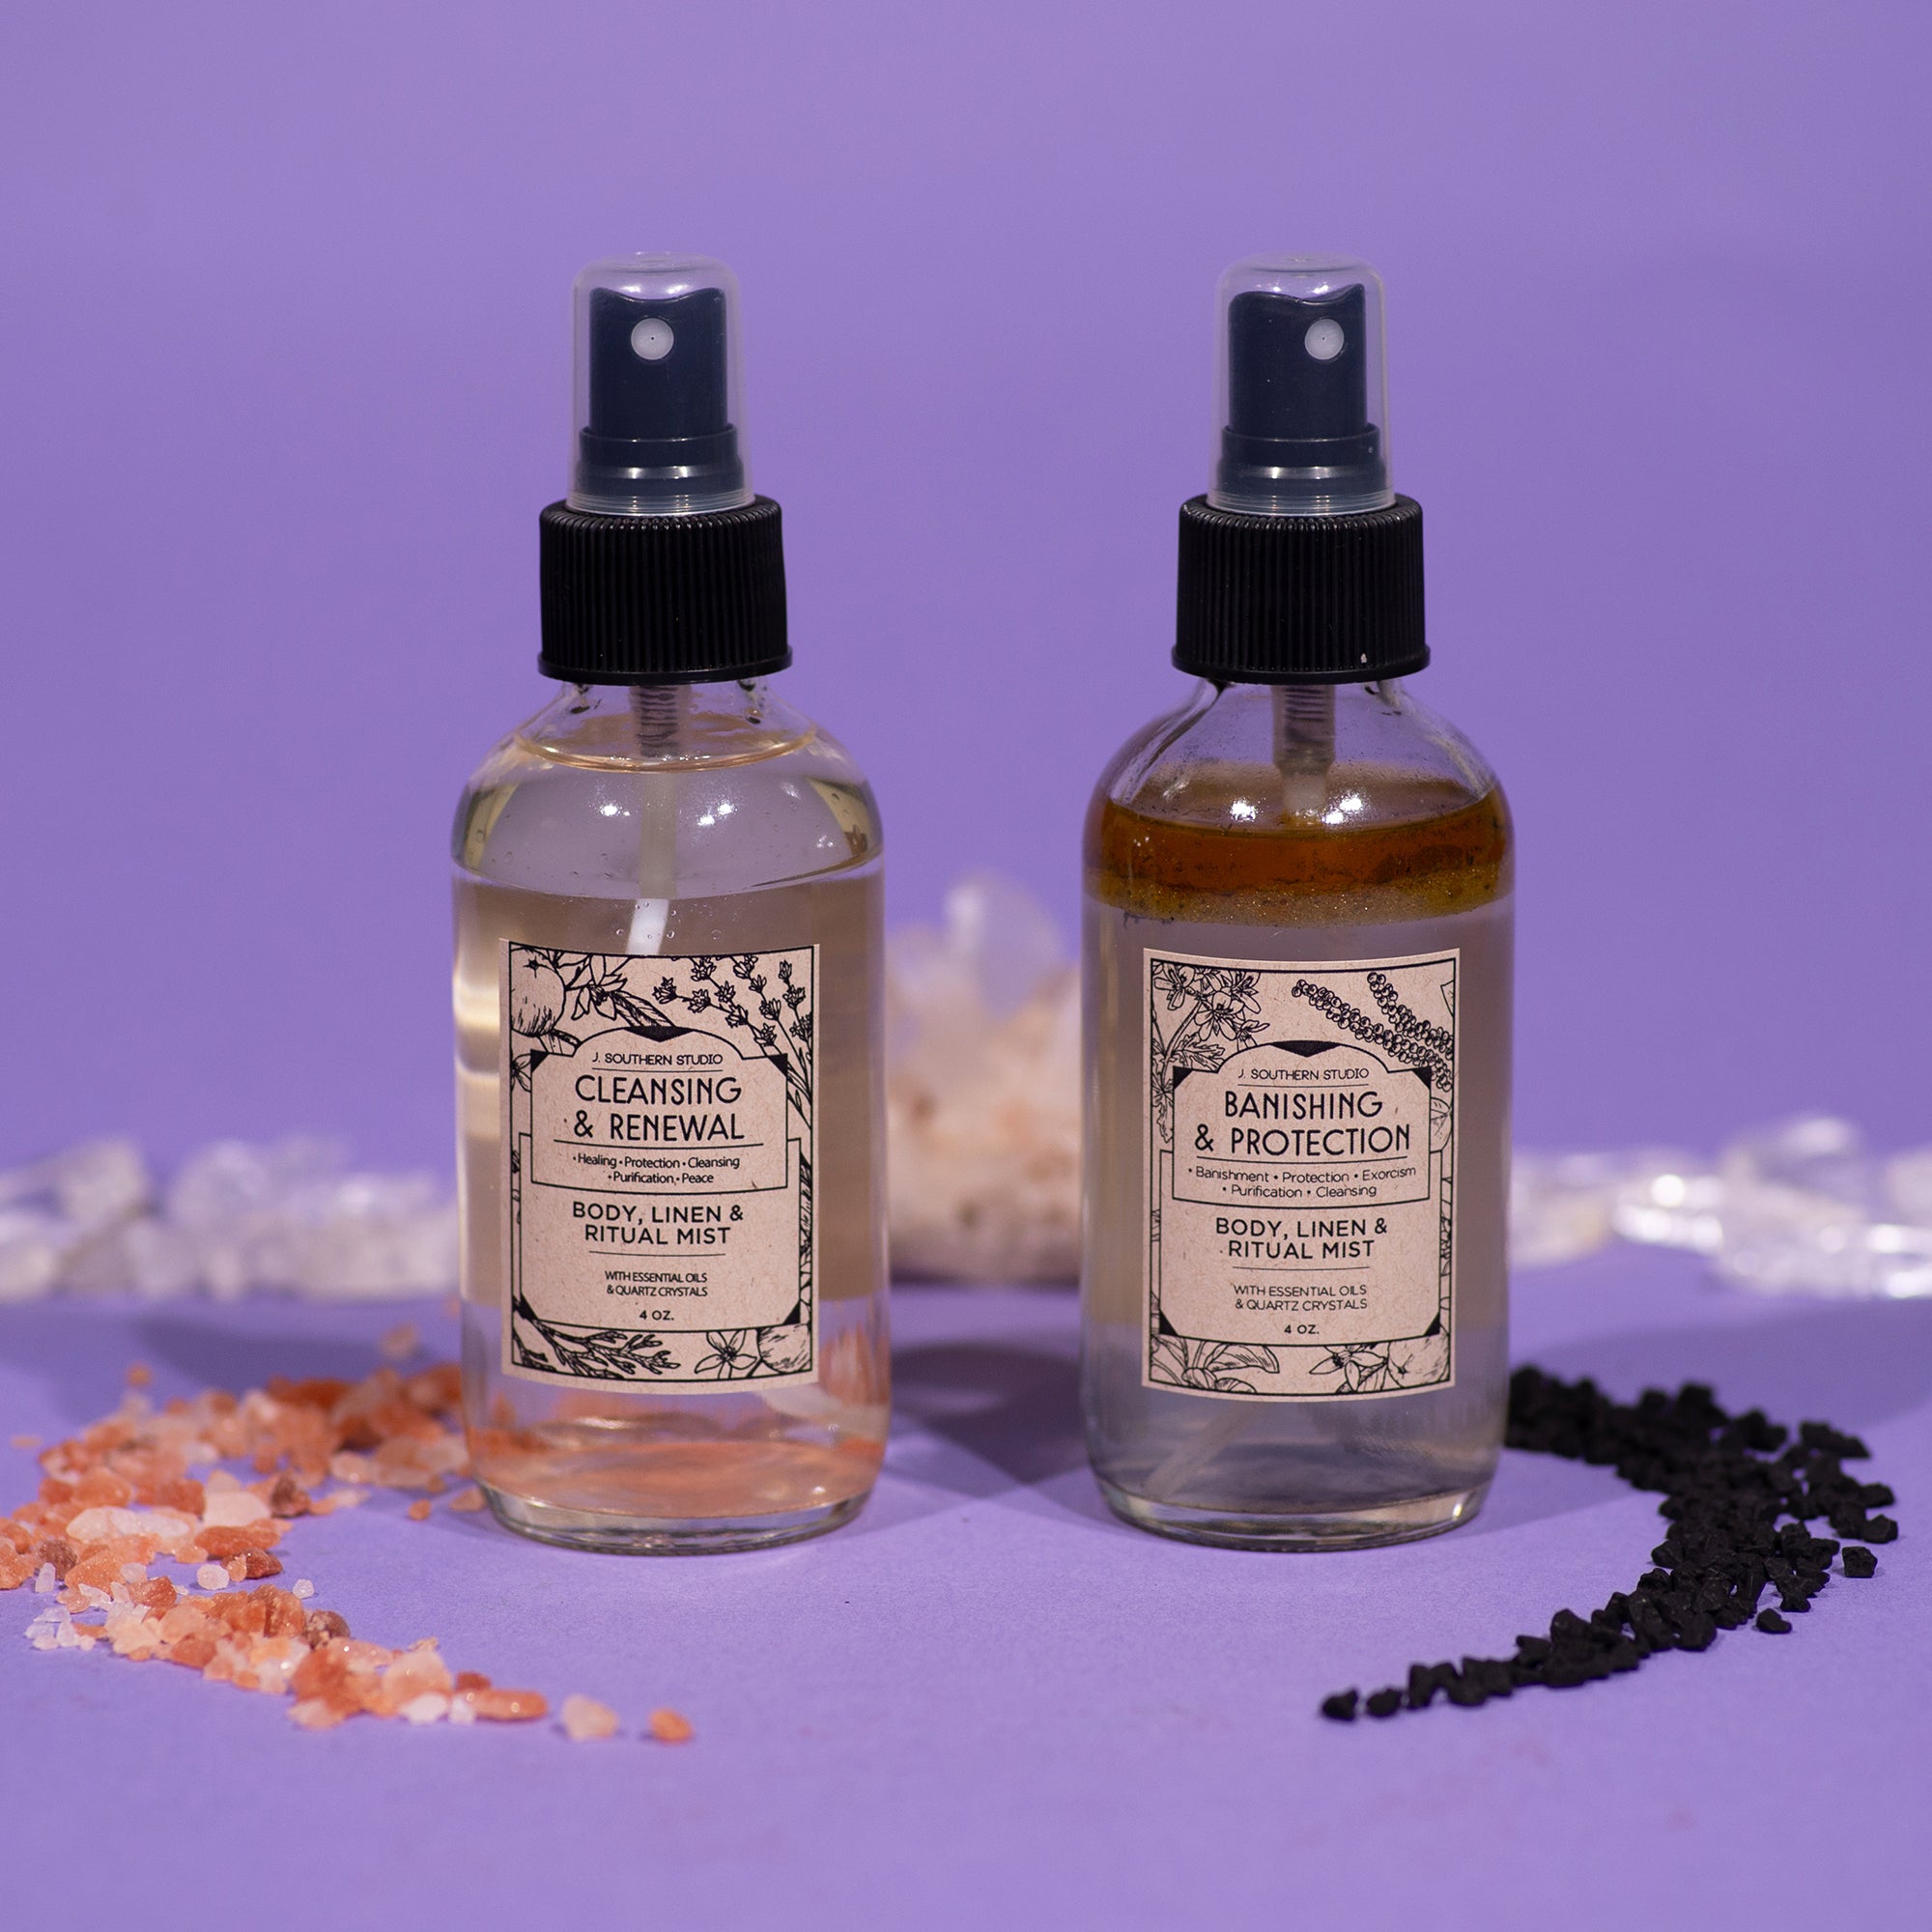 Honeysuckle & Jasmine Ritual Oil - JSouthernStudio